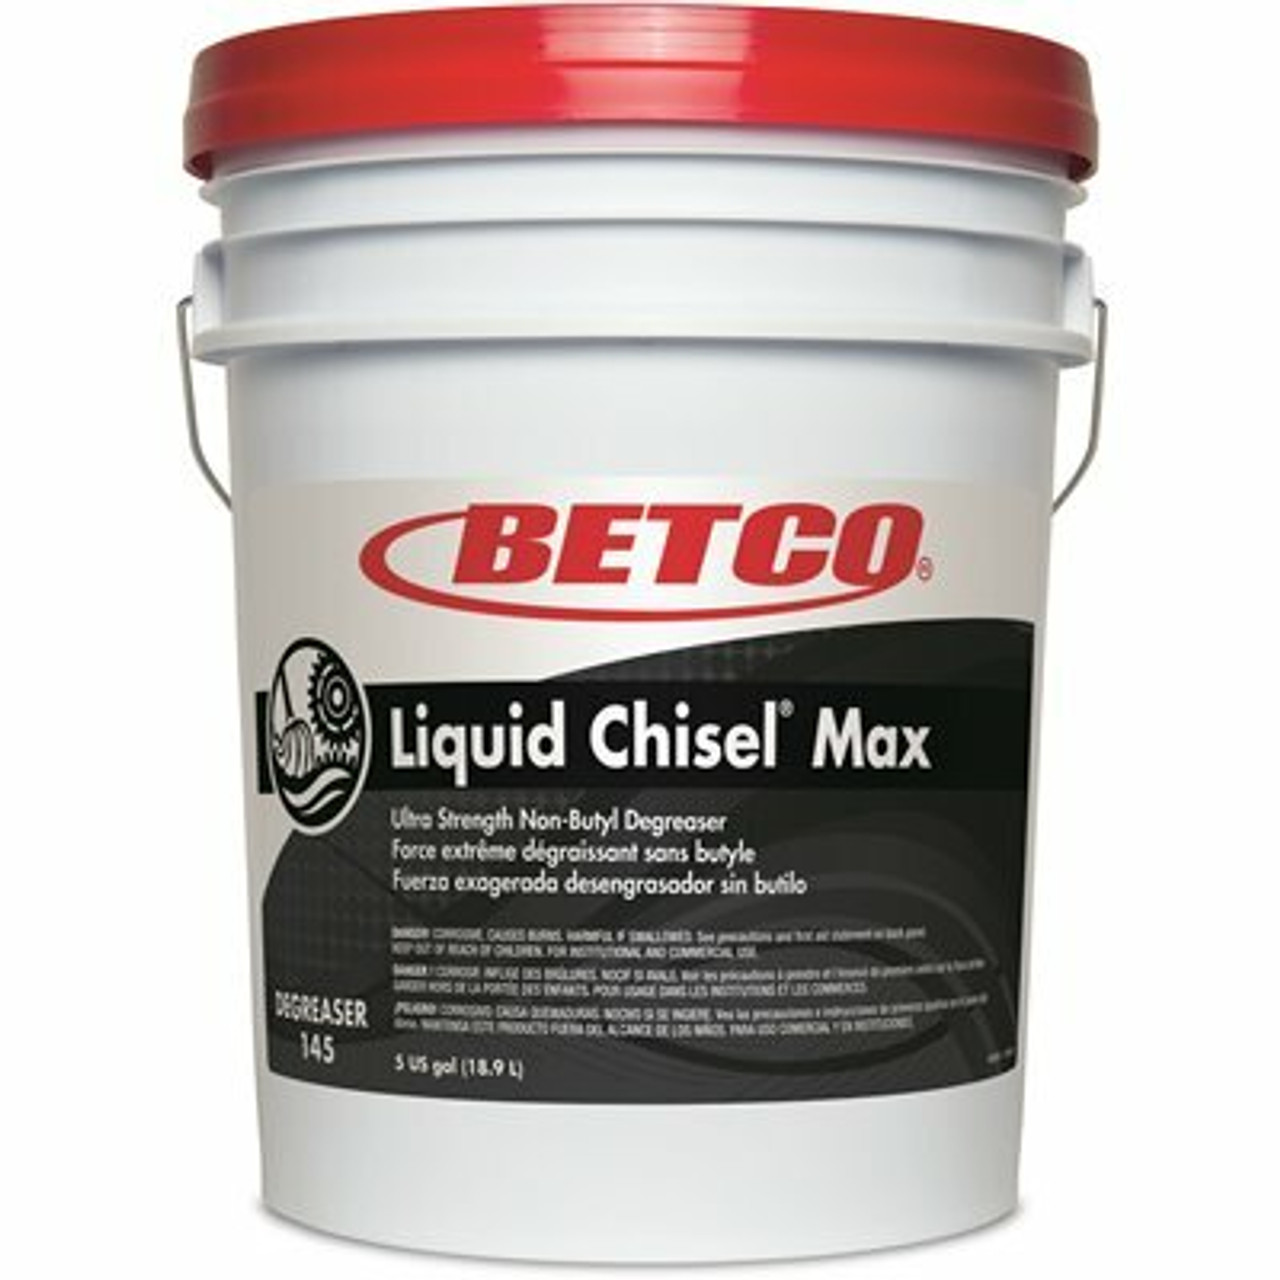 Betco Liquid Chisel Max 5 Gal. Pail Degreaser